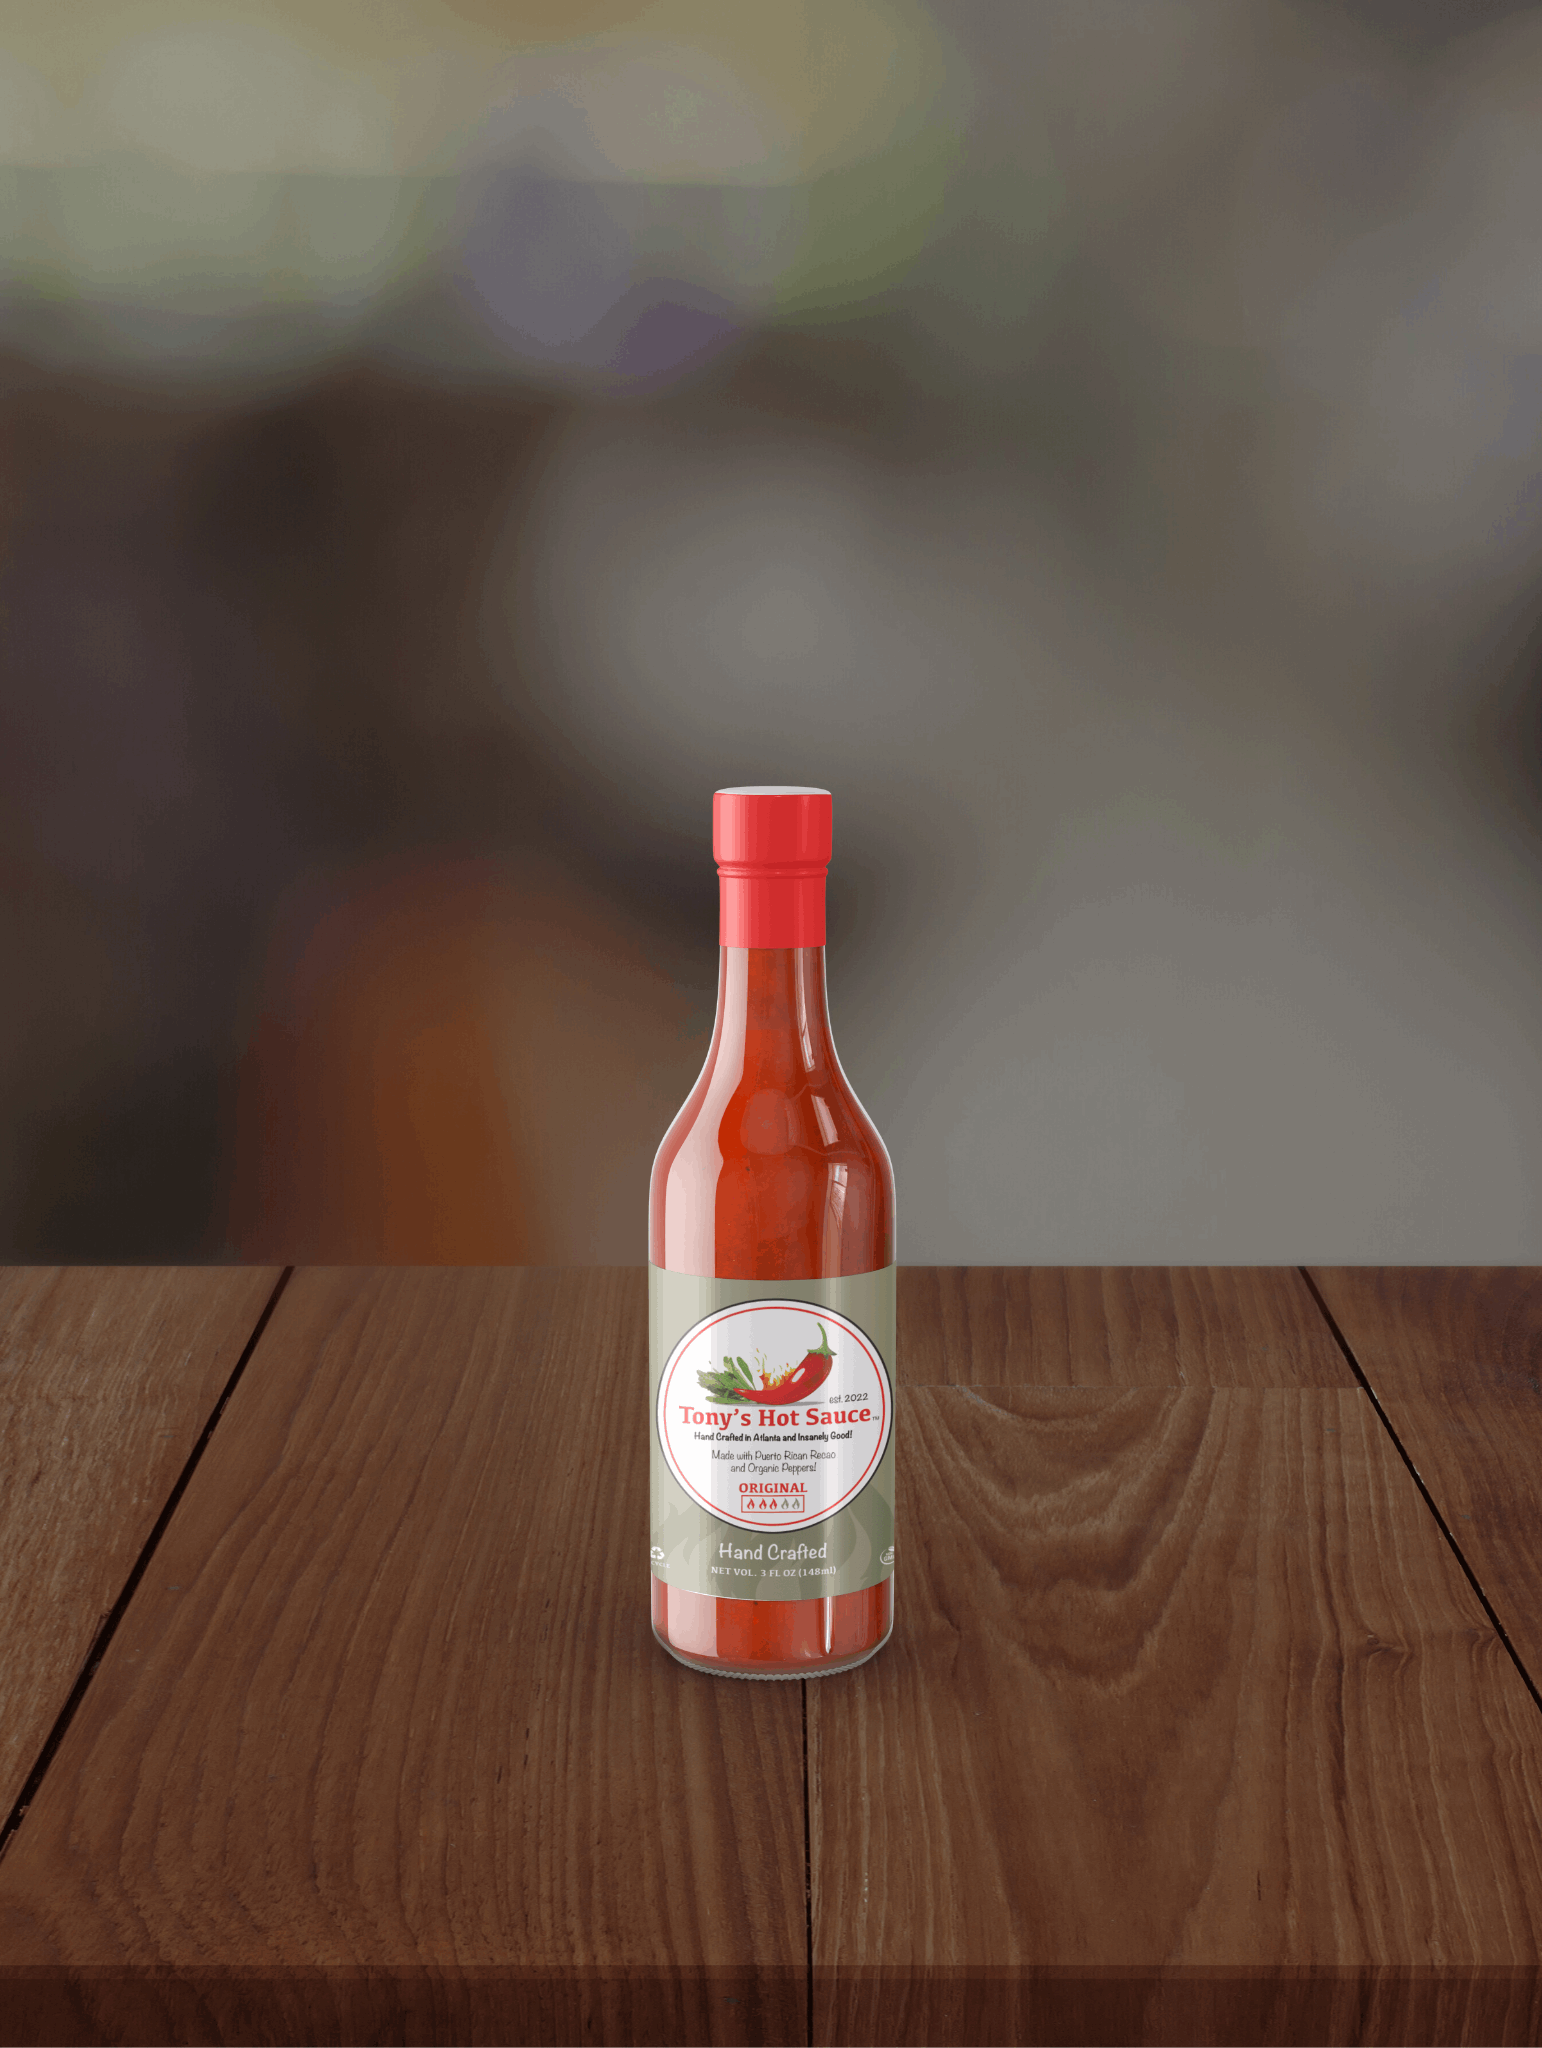 Tony's Handcrafted Hot Sauce- Original Flavor 3.oz Bottle - Tony's Hot Sauce Company